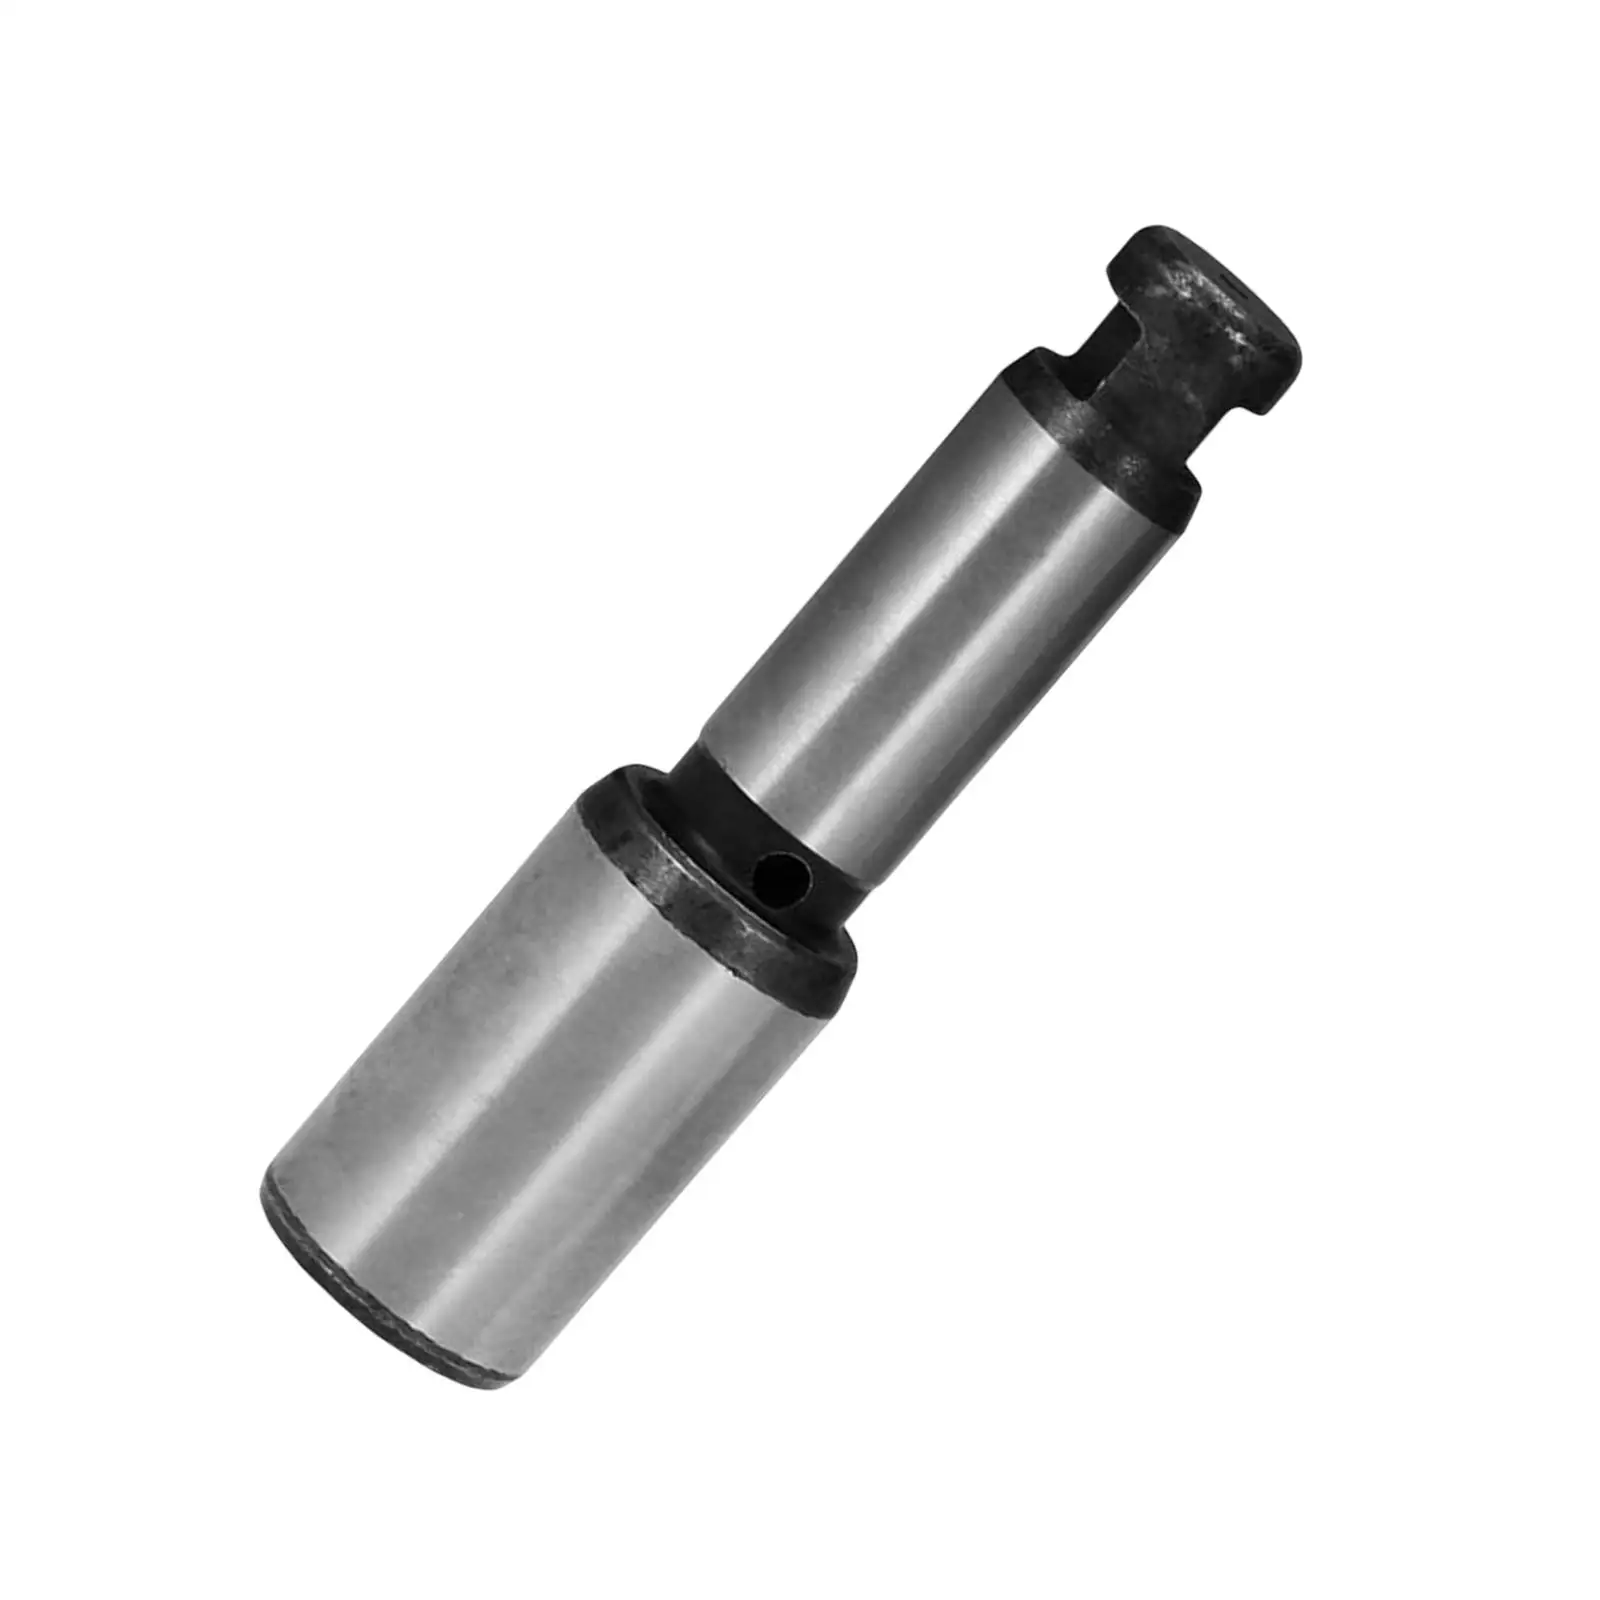 Airless Sprayer Piston Rod Paint Sprayer Equipment Replacement Part Paint Sprayer Piston Rod for 450 Furniture Wall Treatments